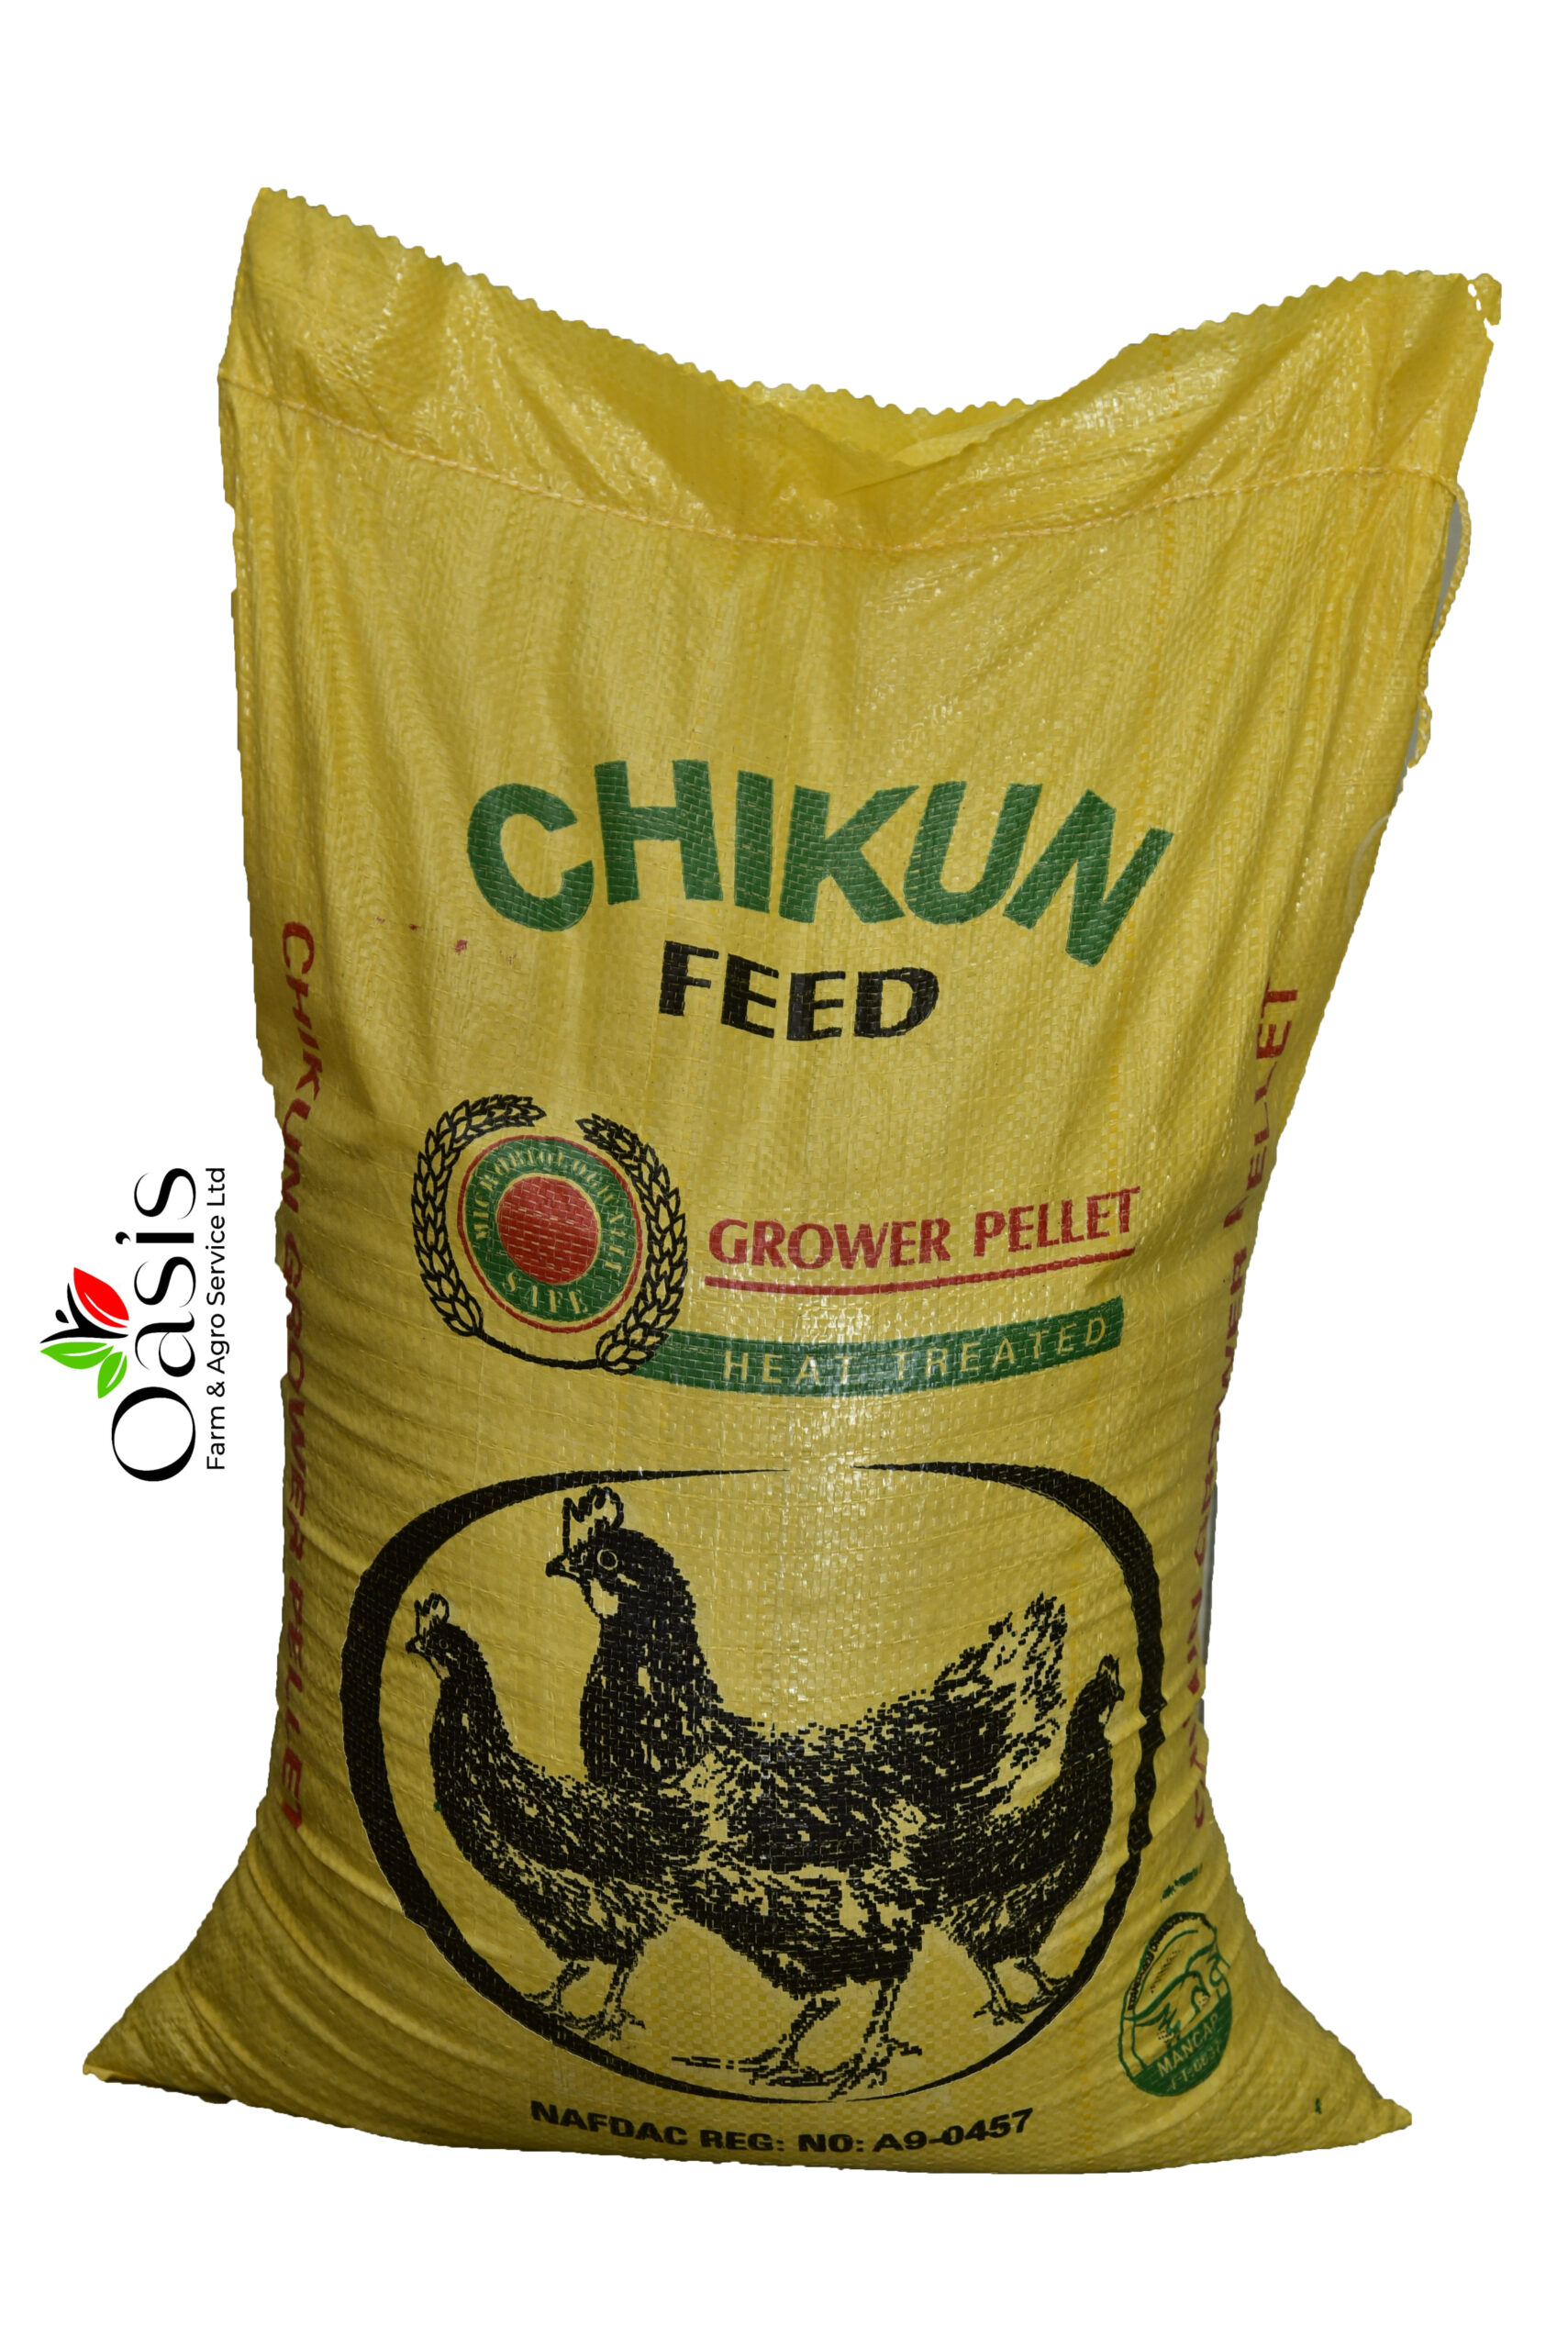 Chikun Feed Grower Pellet (25kg)